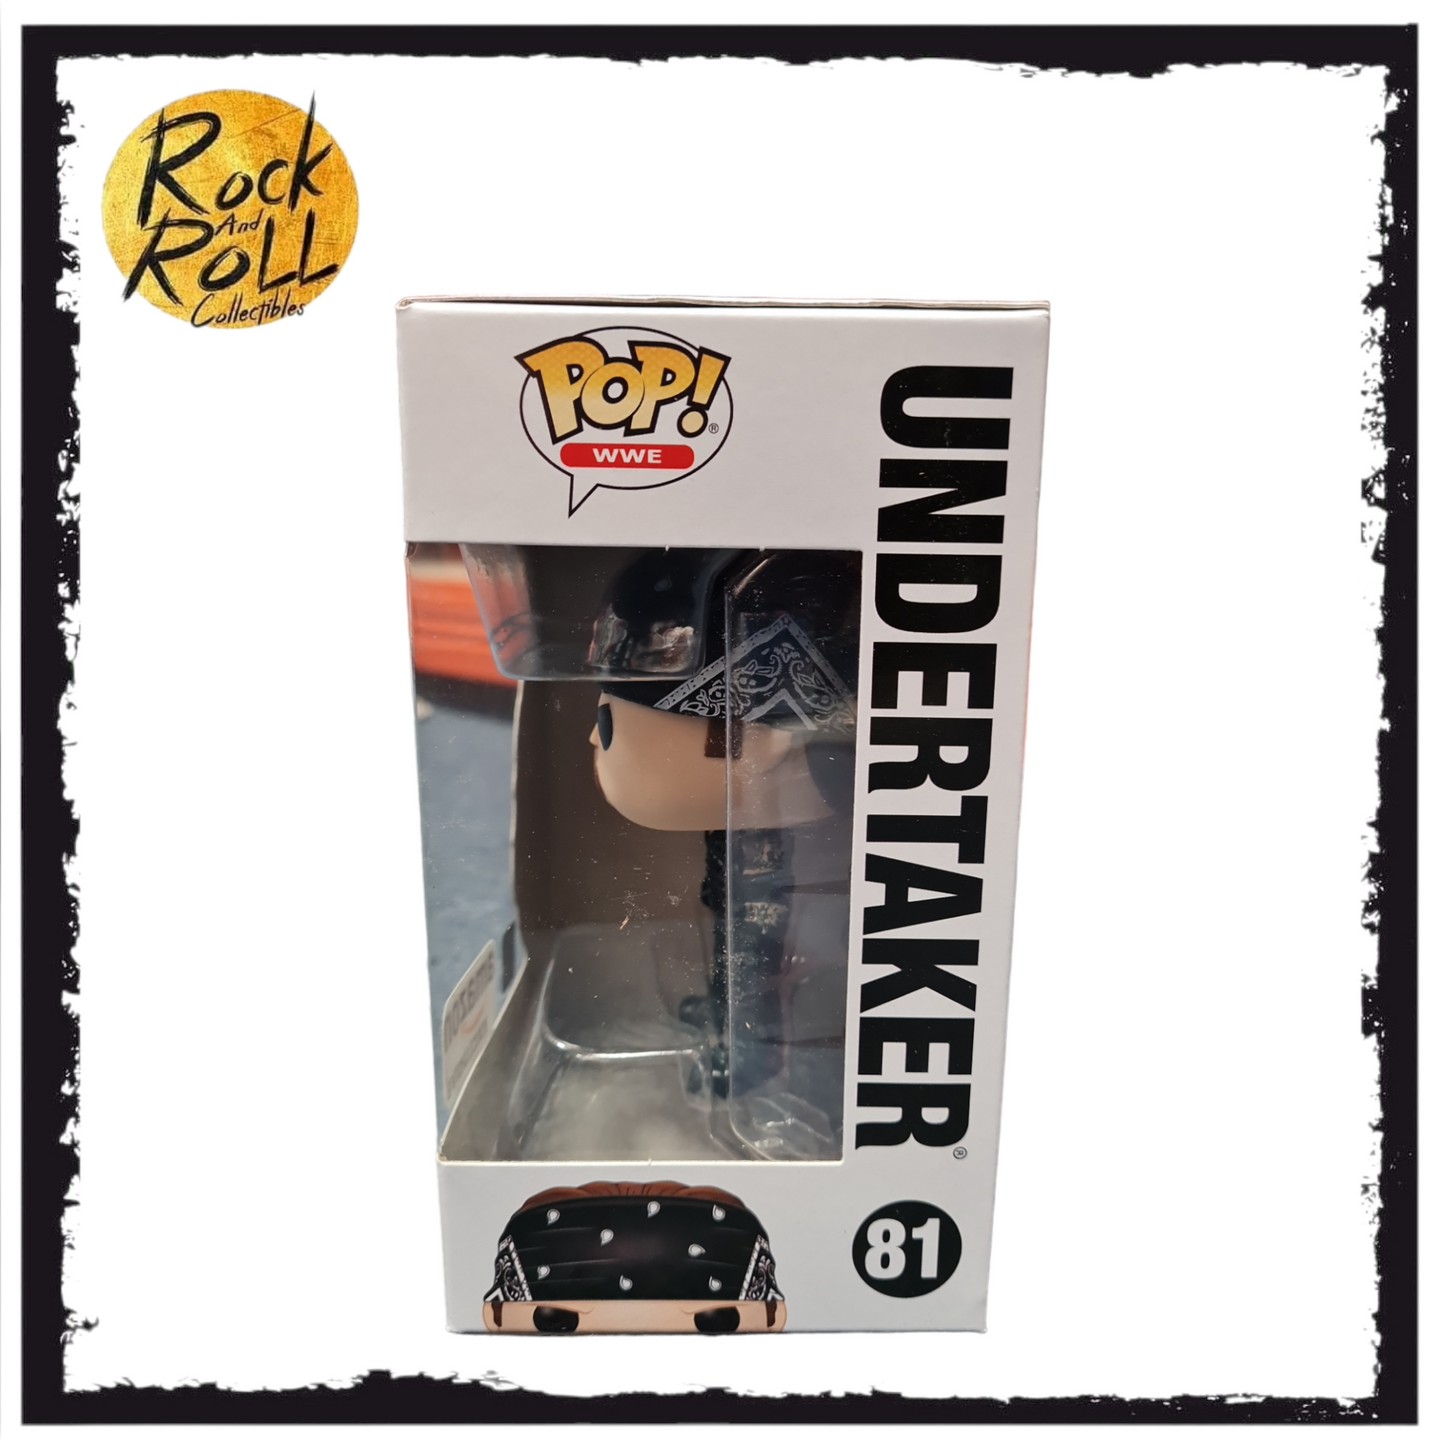 WWE - Boneyard Undertaker - Amazon Exclusive Funko Pop! #81